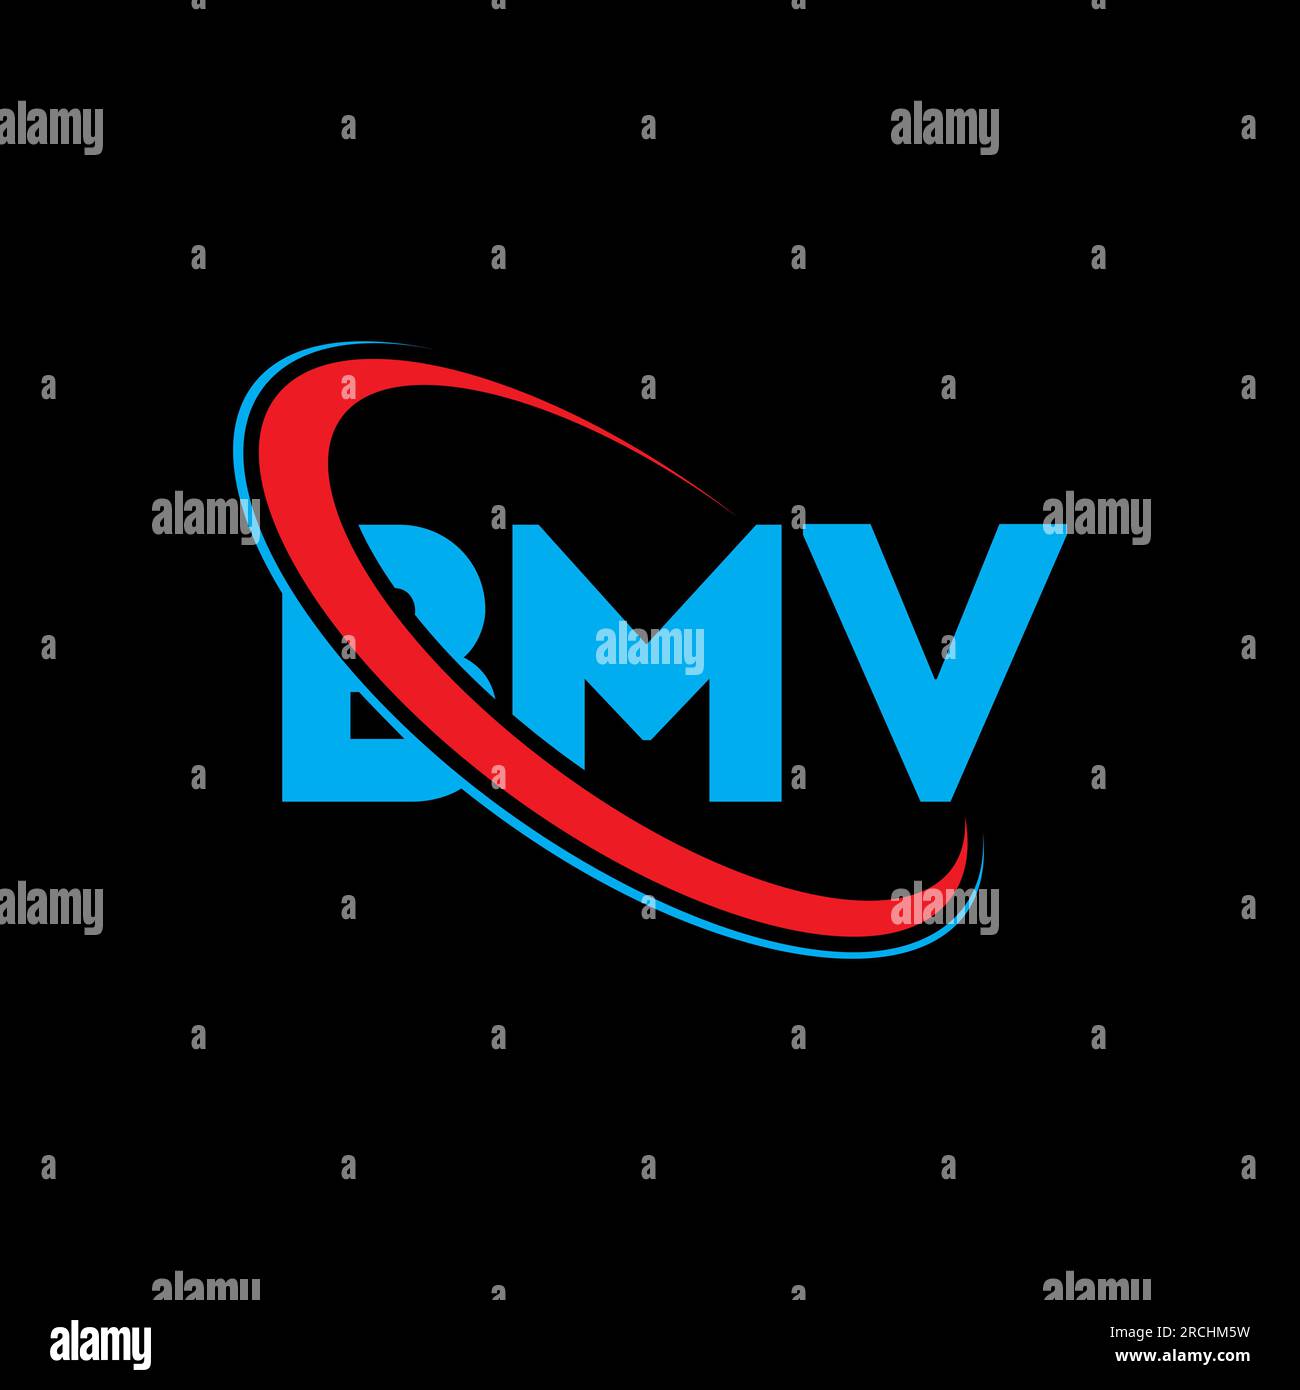 BMV logo. BMV letter. BMV letter logo design. Initials BMV logo linked with circle and uppercase monogram logo. BMV typography for technology, busines Stock Vector